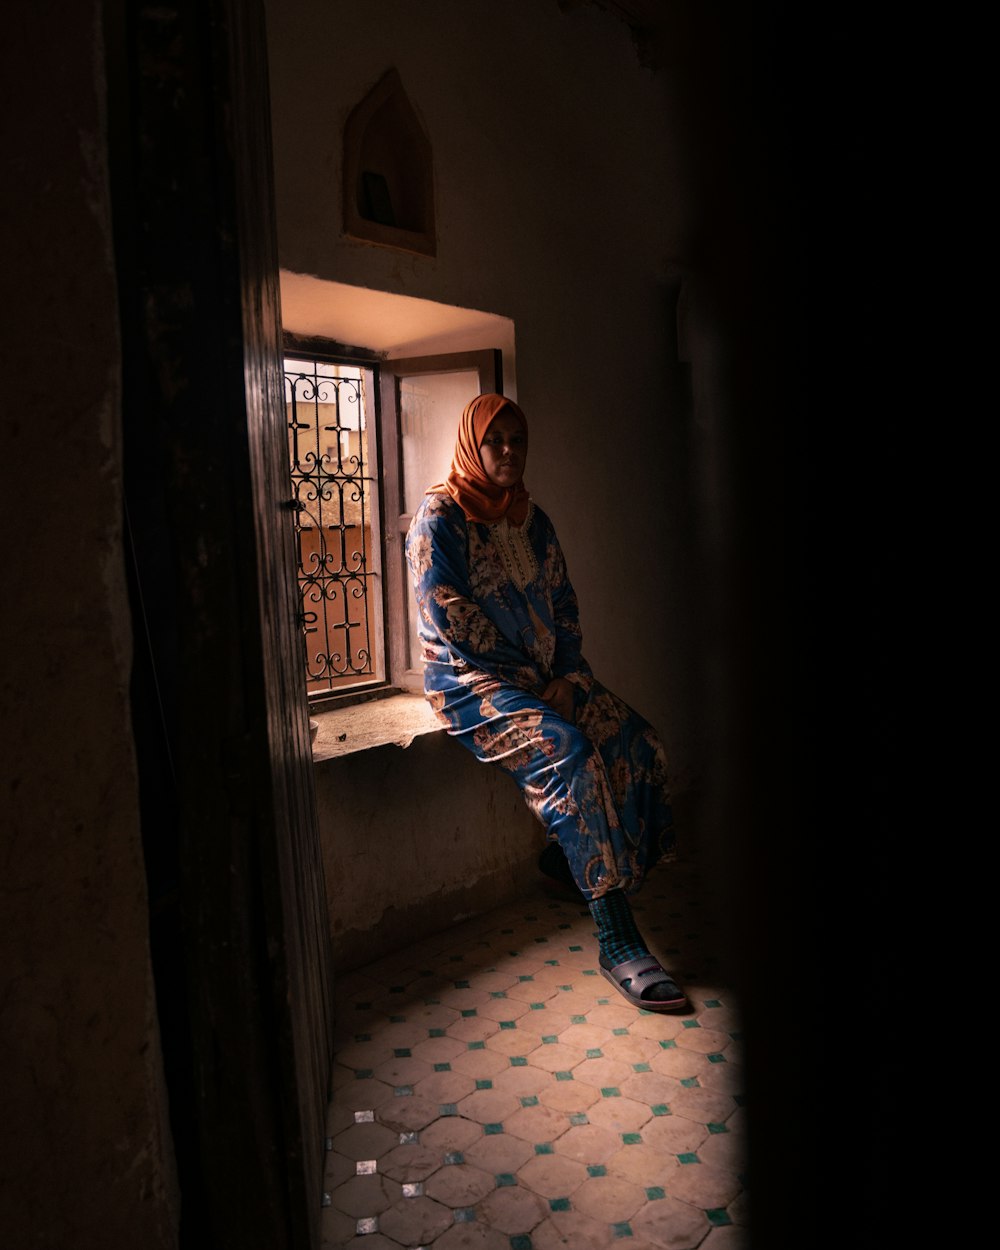 a woman sitting on a window sill in a dark room